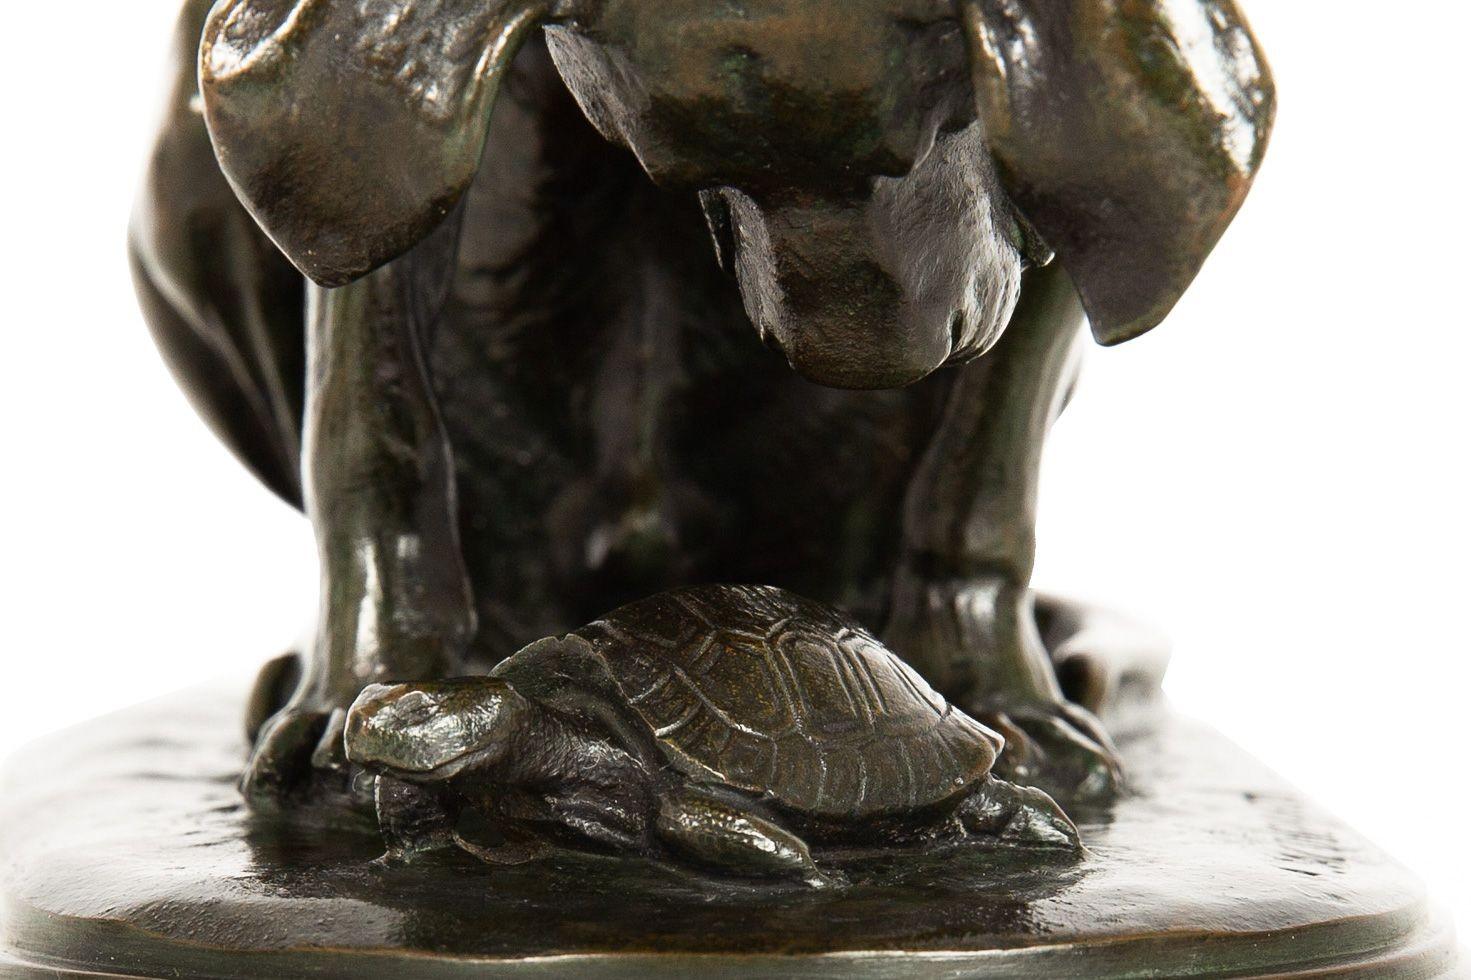 French Antique Bronze Sculpture “Hound & Tortoise” by Henri Jacquemart For Sale 8